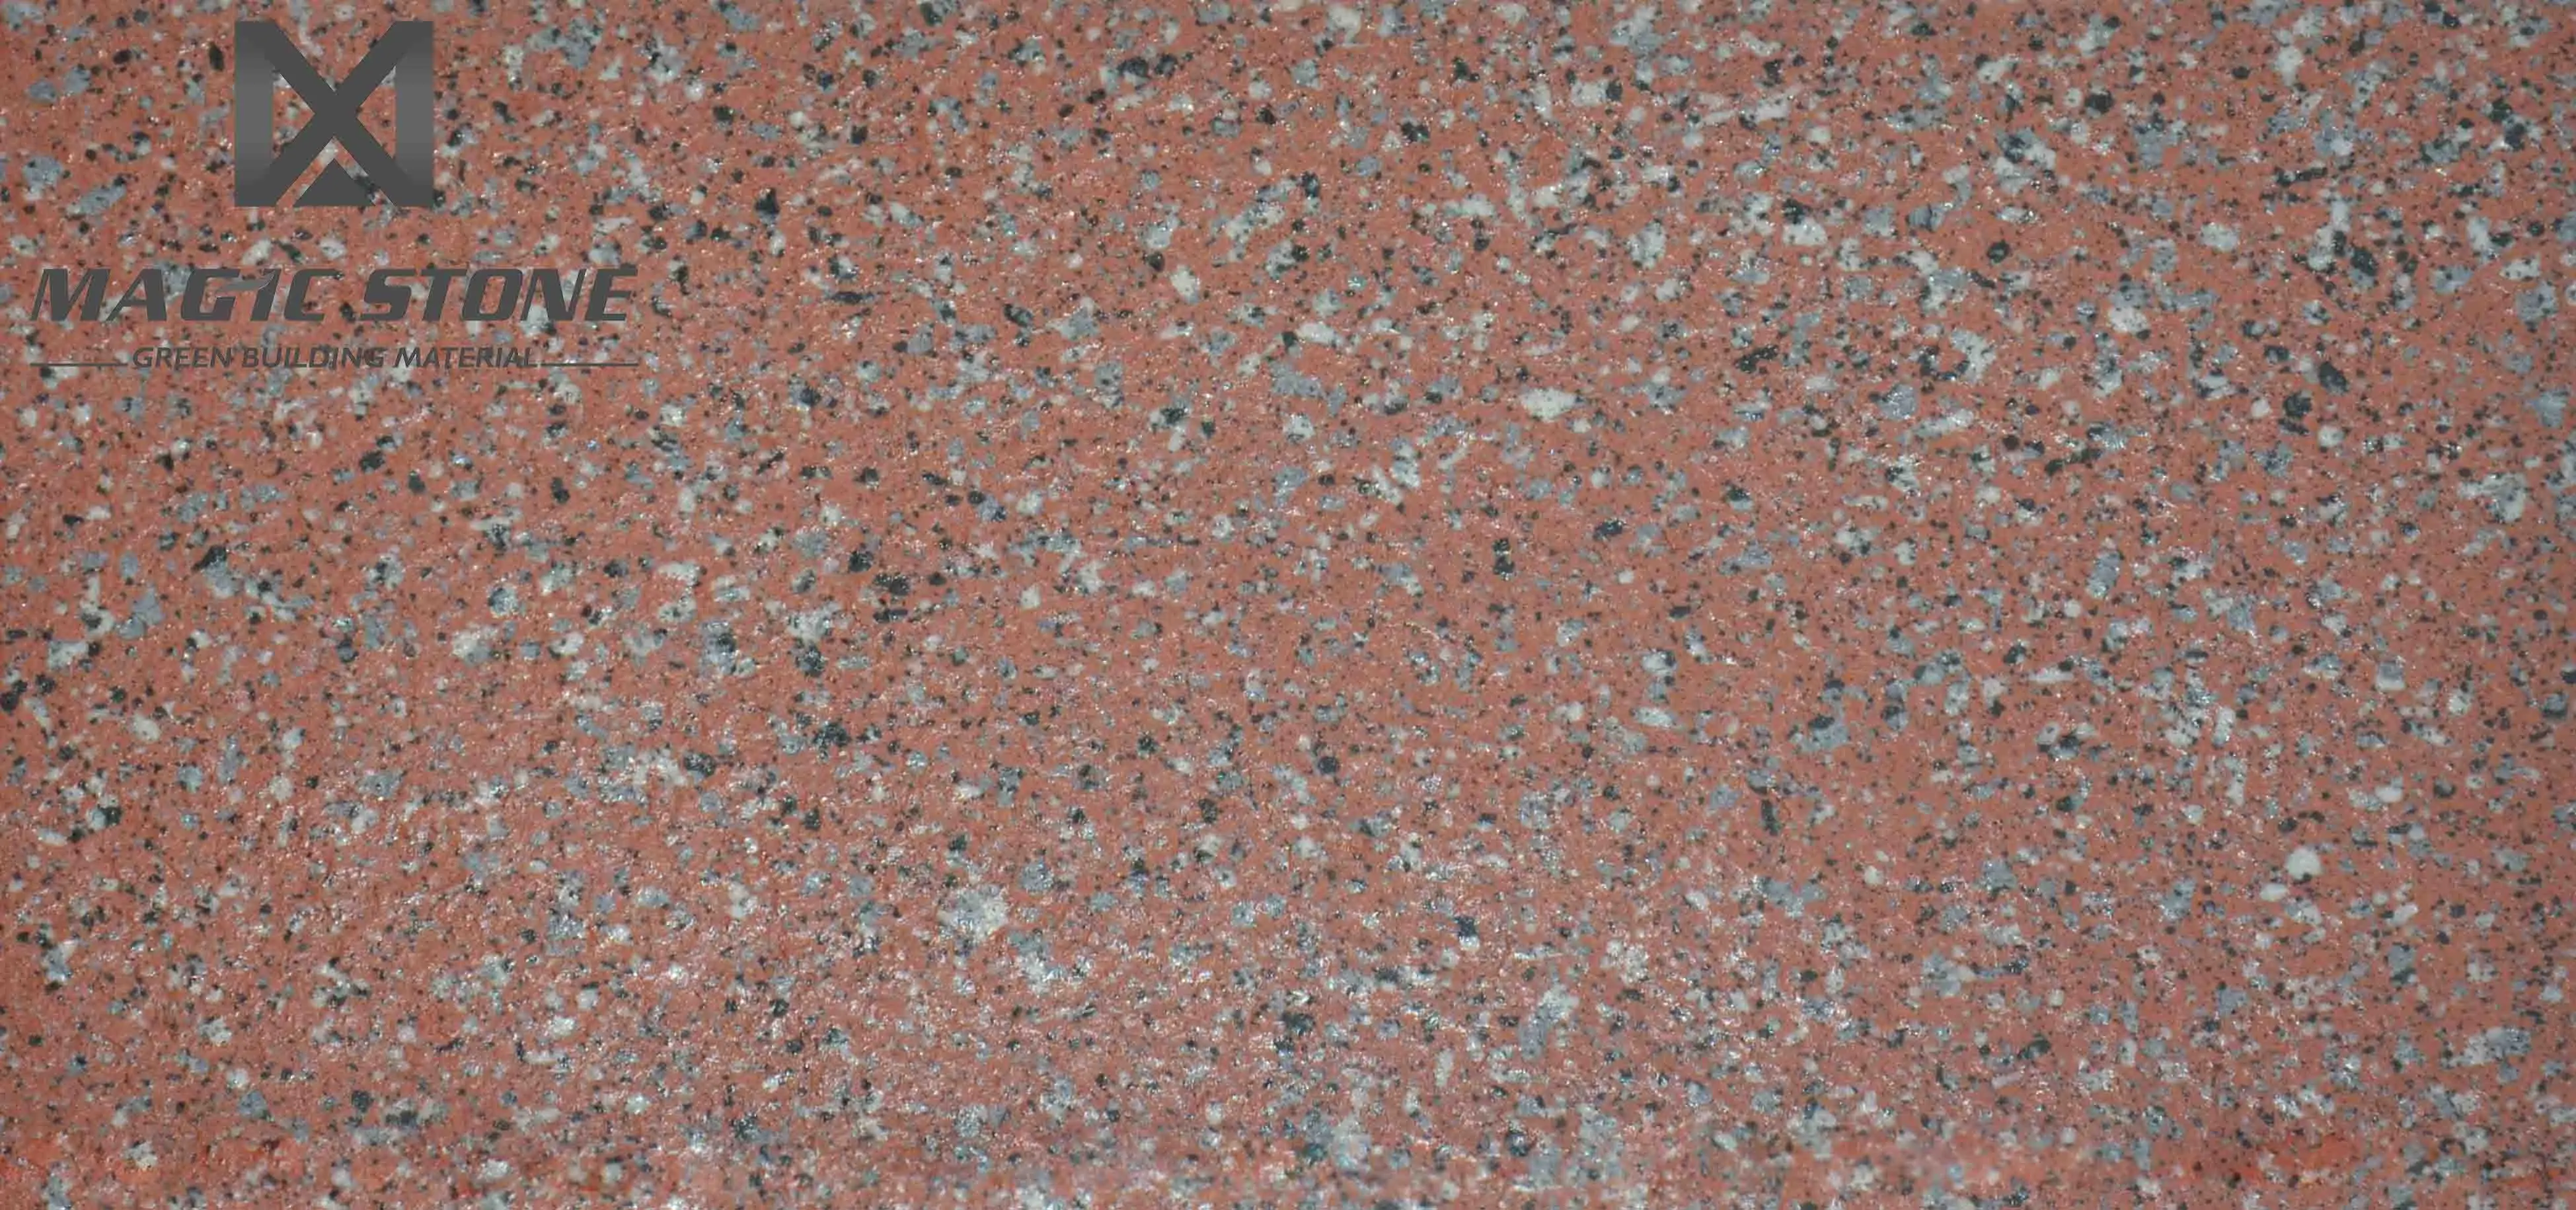 5mm thickness 1190*595mm granite stone exterior wall tiles designs soft granite tile